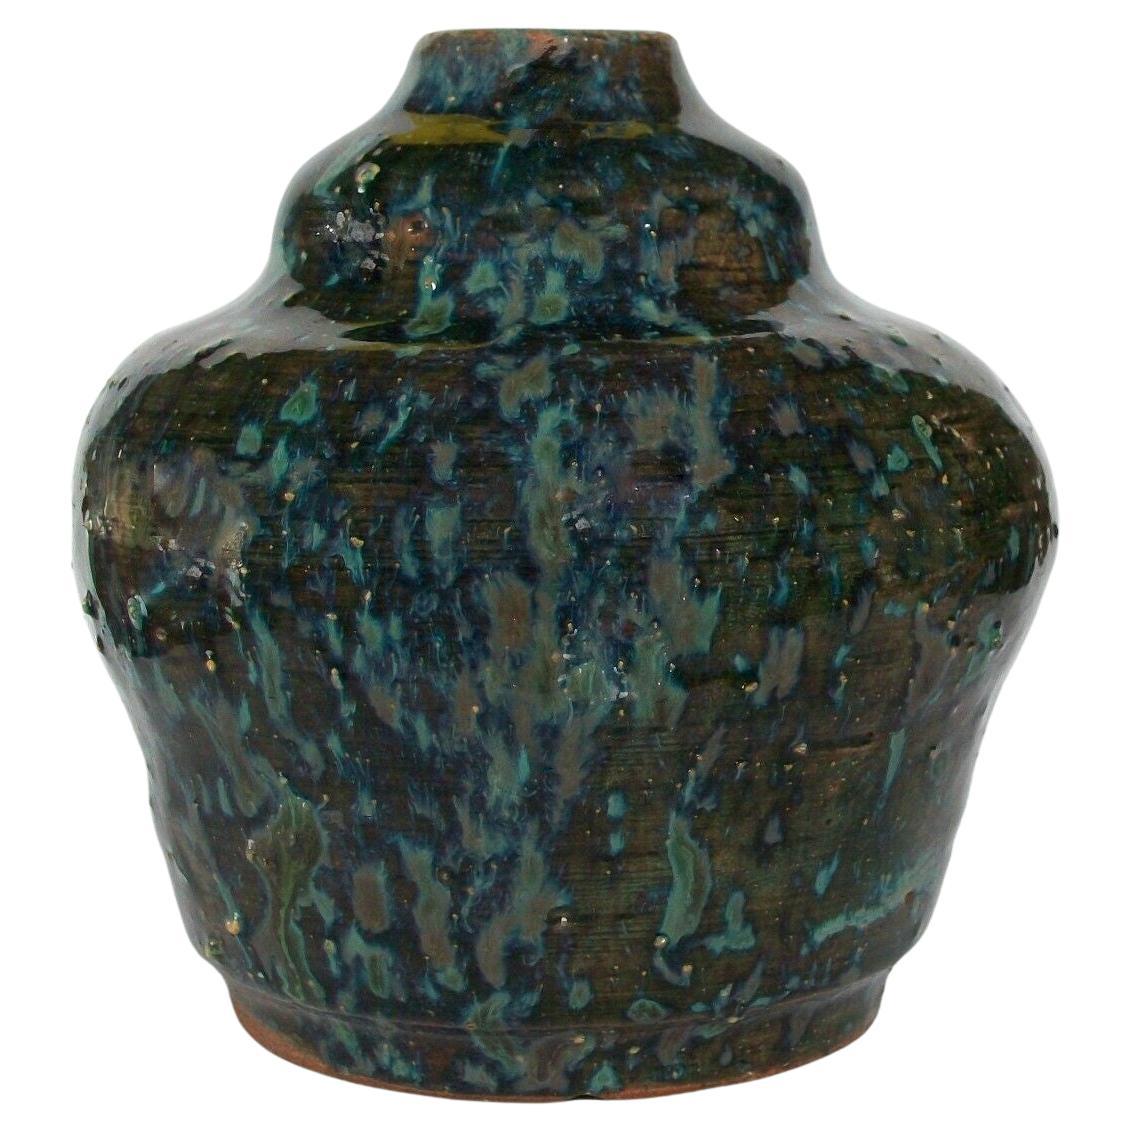 Art Nouveau Studio Pottery Vase, Terracotta with Splash Glaze, 20th Century